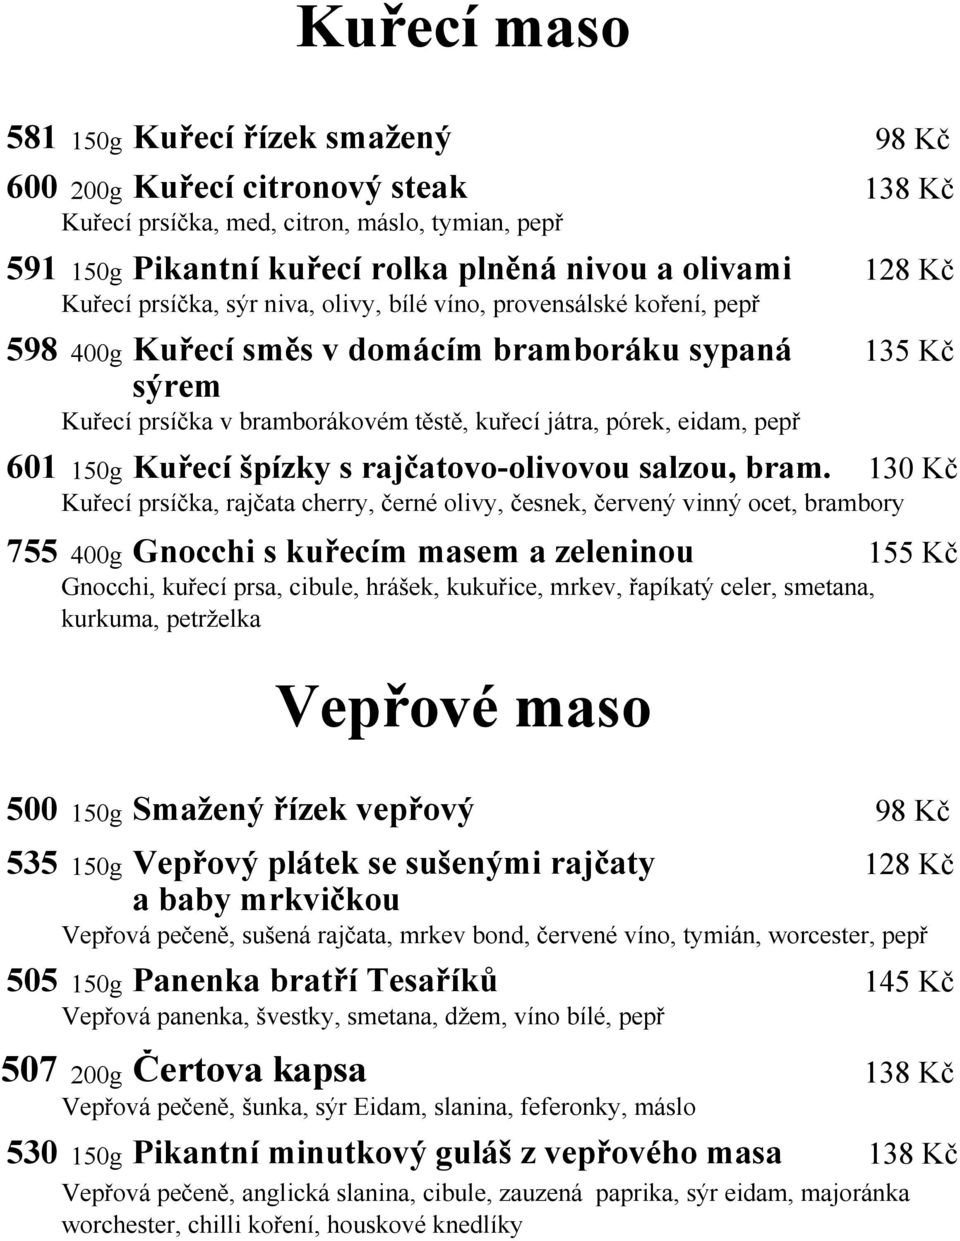 pepř 601 150g Kuřecí špízky s rajčatovo-olivovou salzou, bram.